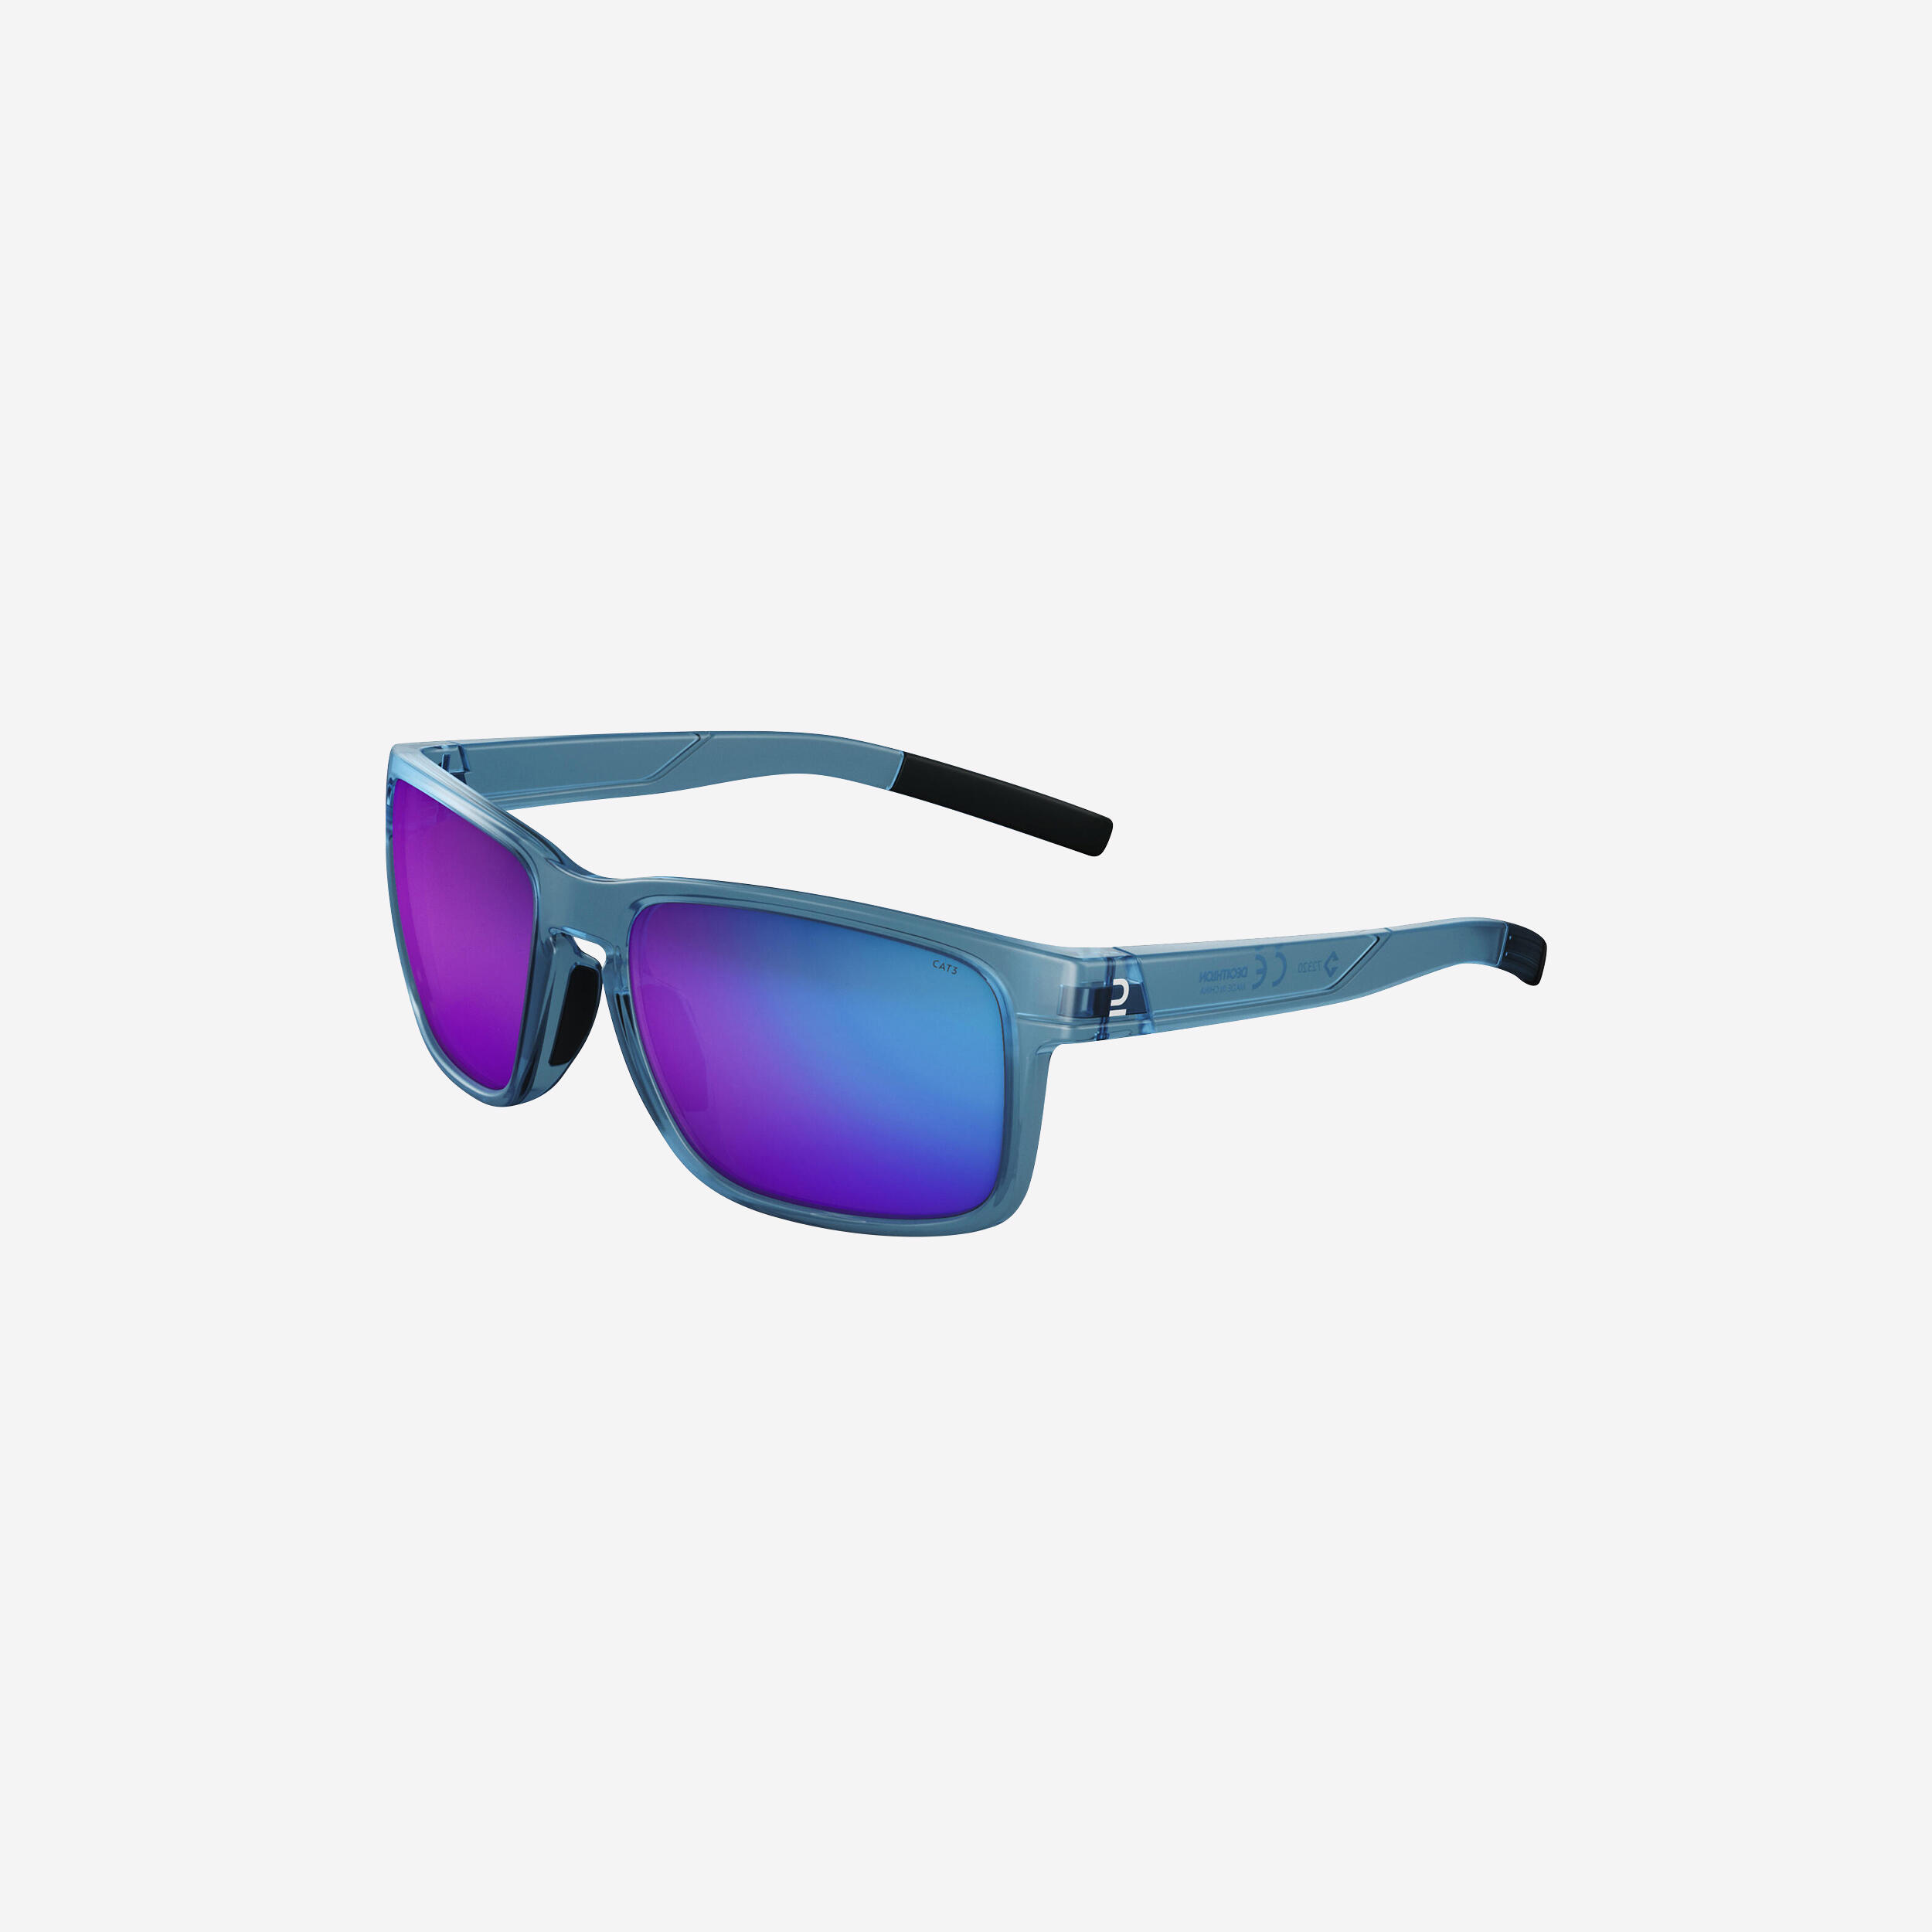 Hiking Category 3 Sunglasses - MH 530 Blue